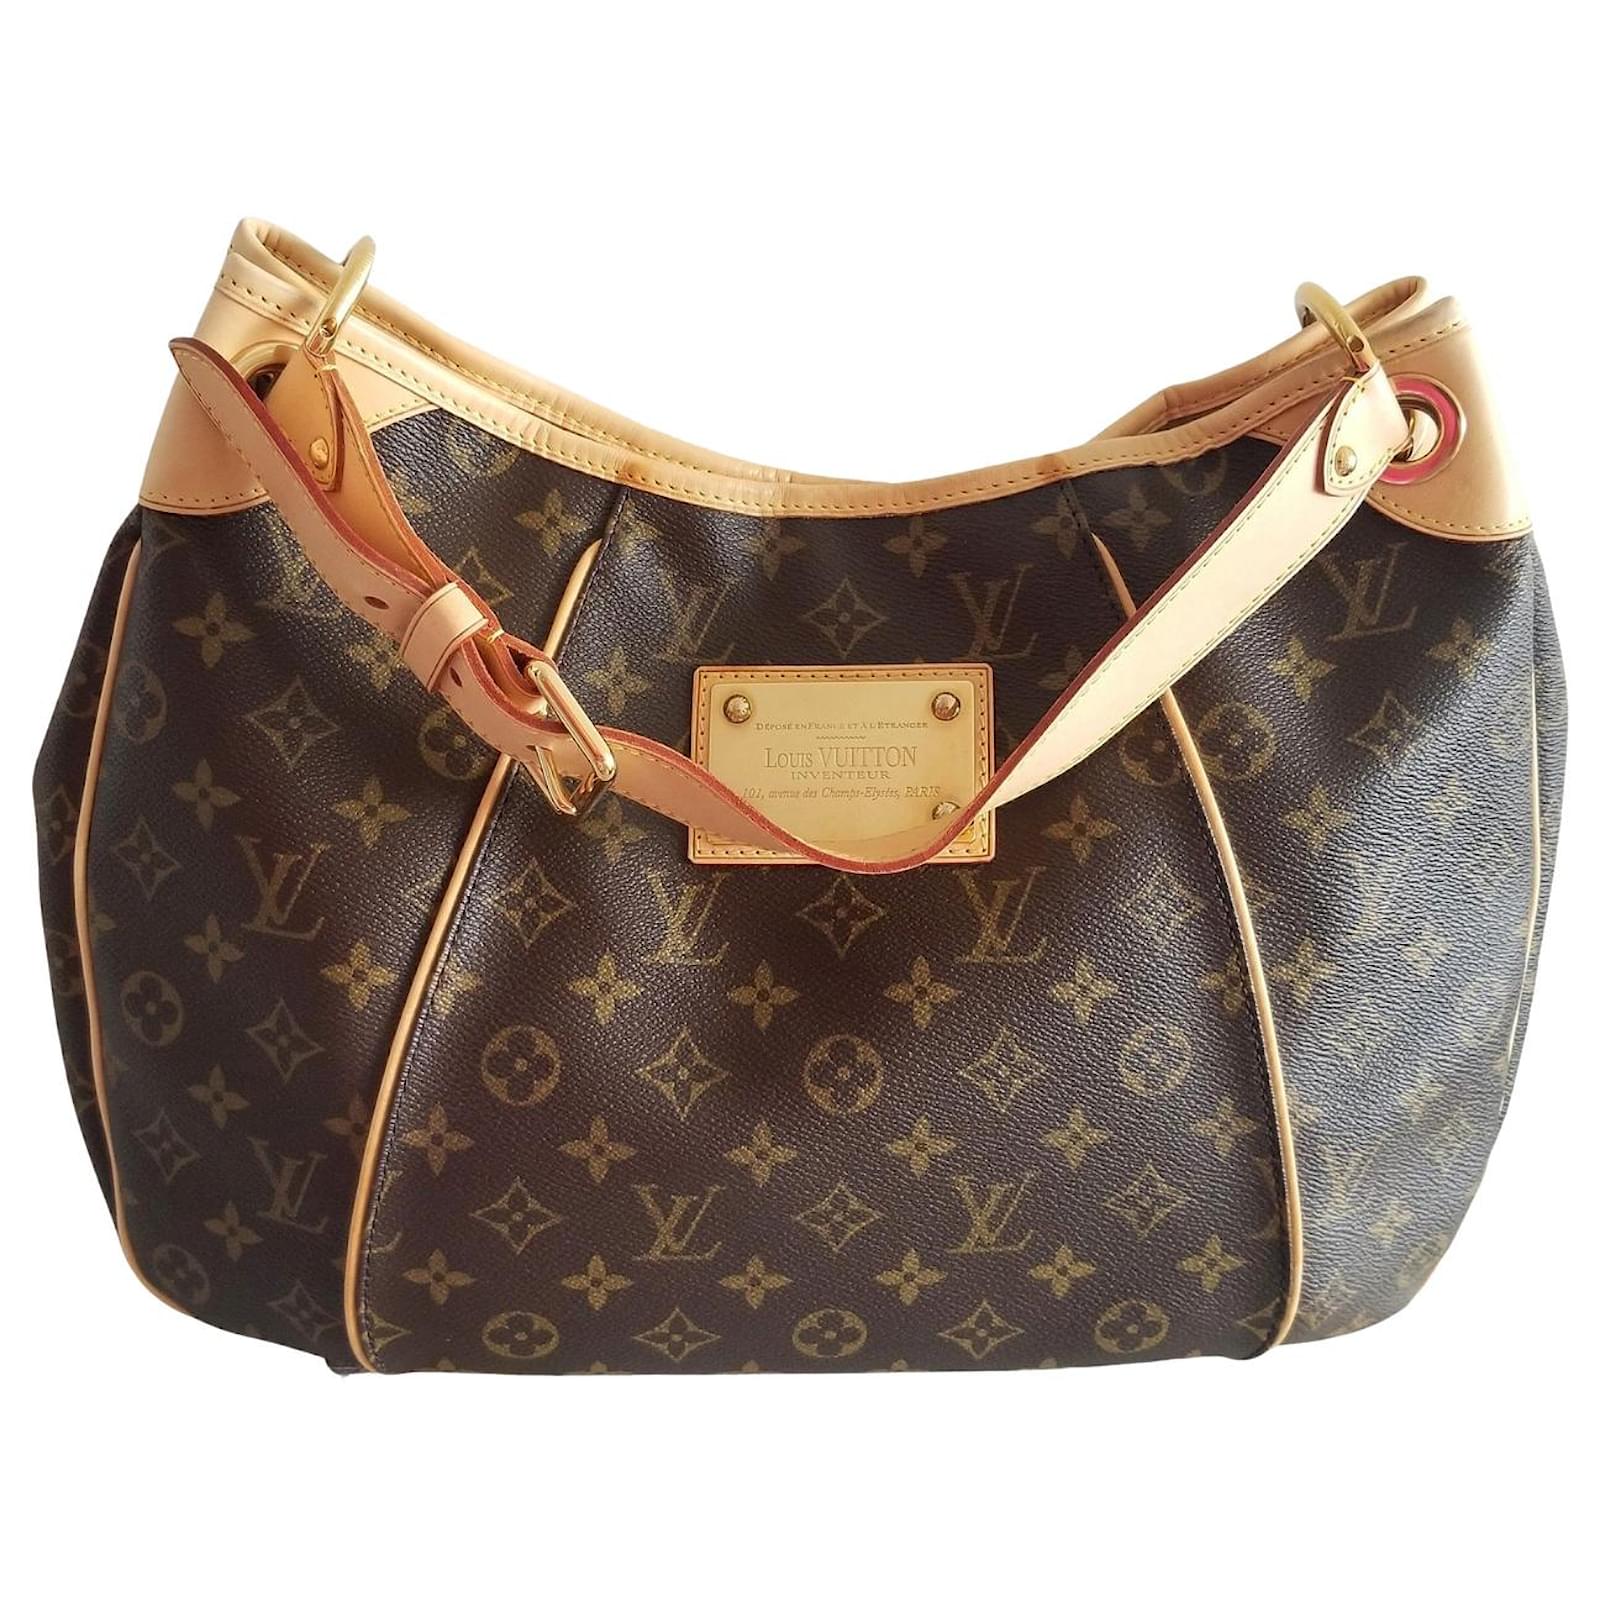 Used Louis Vuitton Galliera Hobo Shoulder Handbag HANDBAGS / LARGE - LEATHER